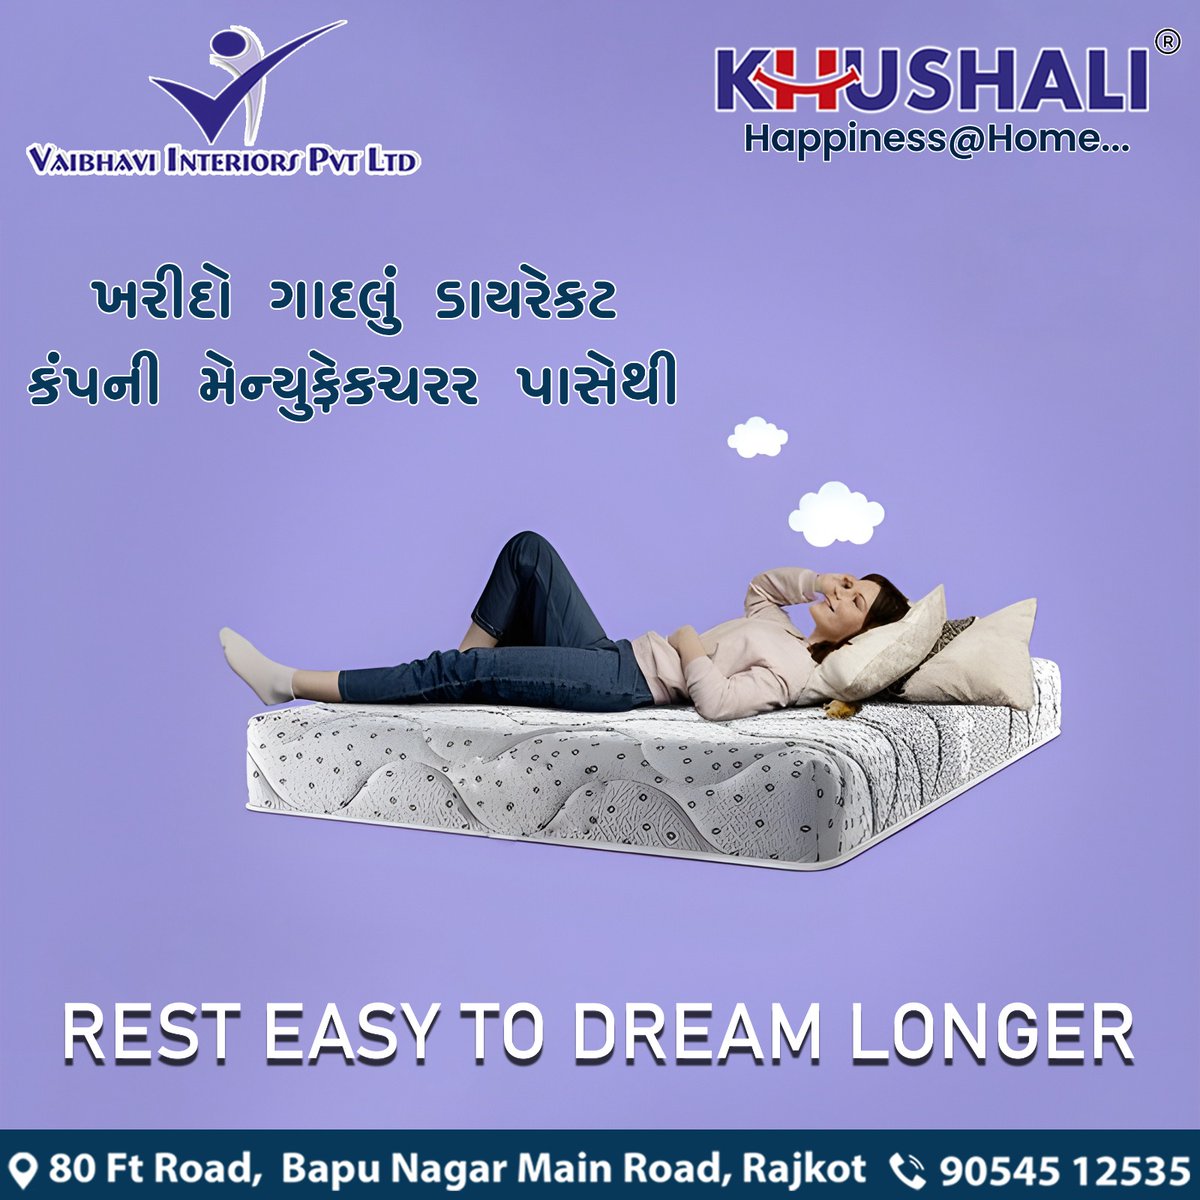 People can easily rest and comfortable only with khushali mattress 
.
.
.
#vaibhaviinteriorpvtltd #mattress #vaibhavi #interior #khushali #happineshome #softmattress #bed #bedroom #sleep #guarantee #15years #sleepbetter #healthysleep #SleepBetterFeelBetter #bedmattress #retail